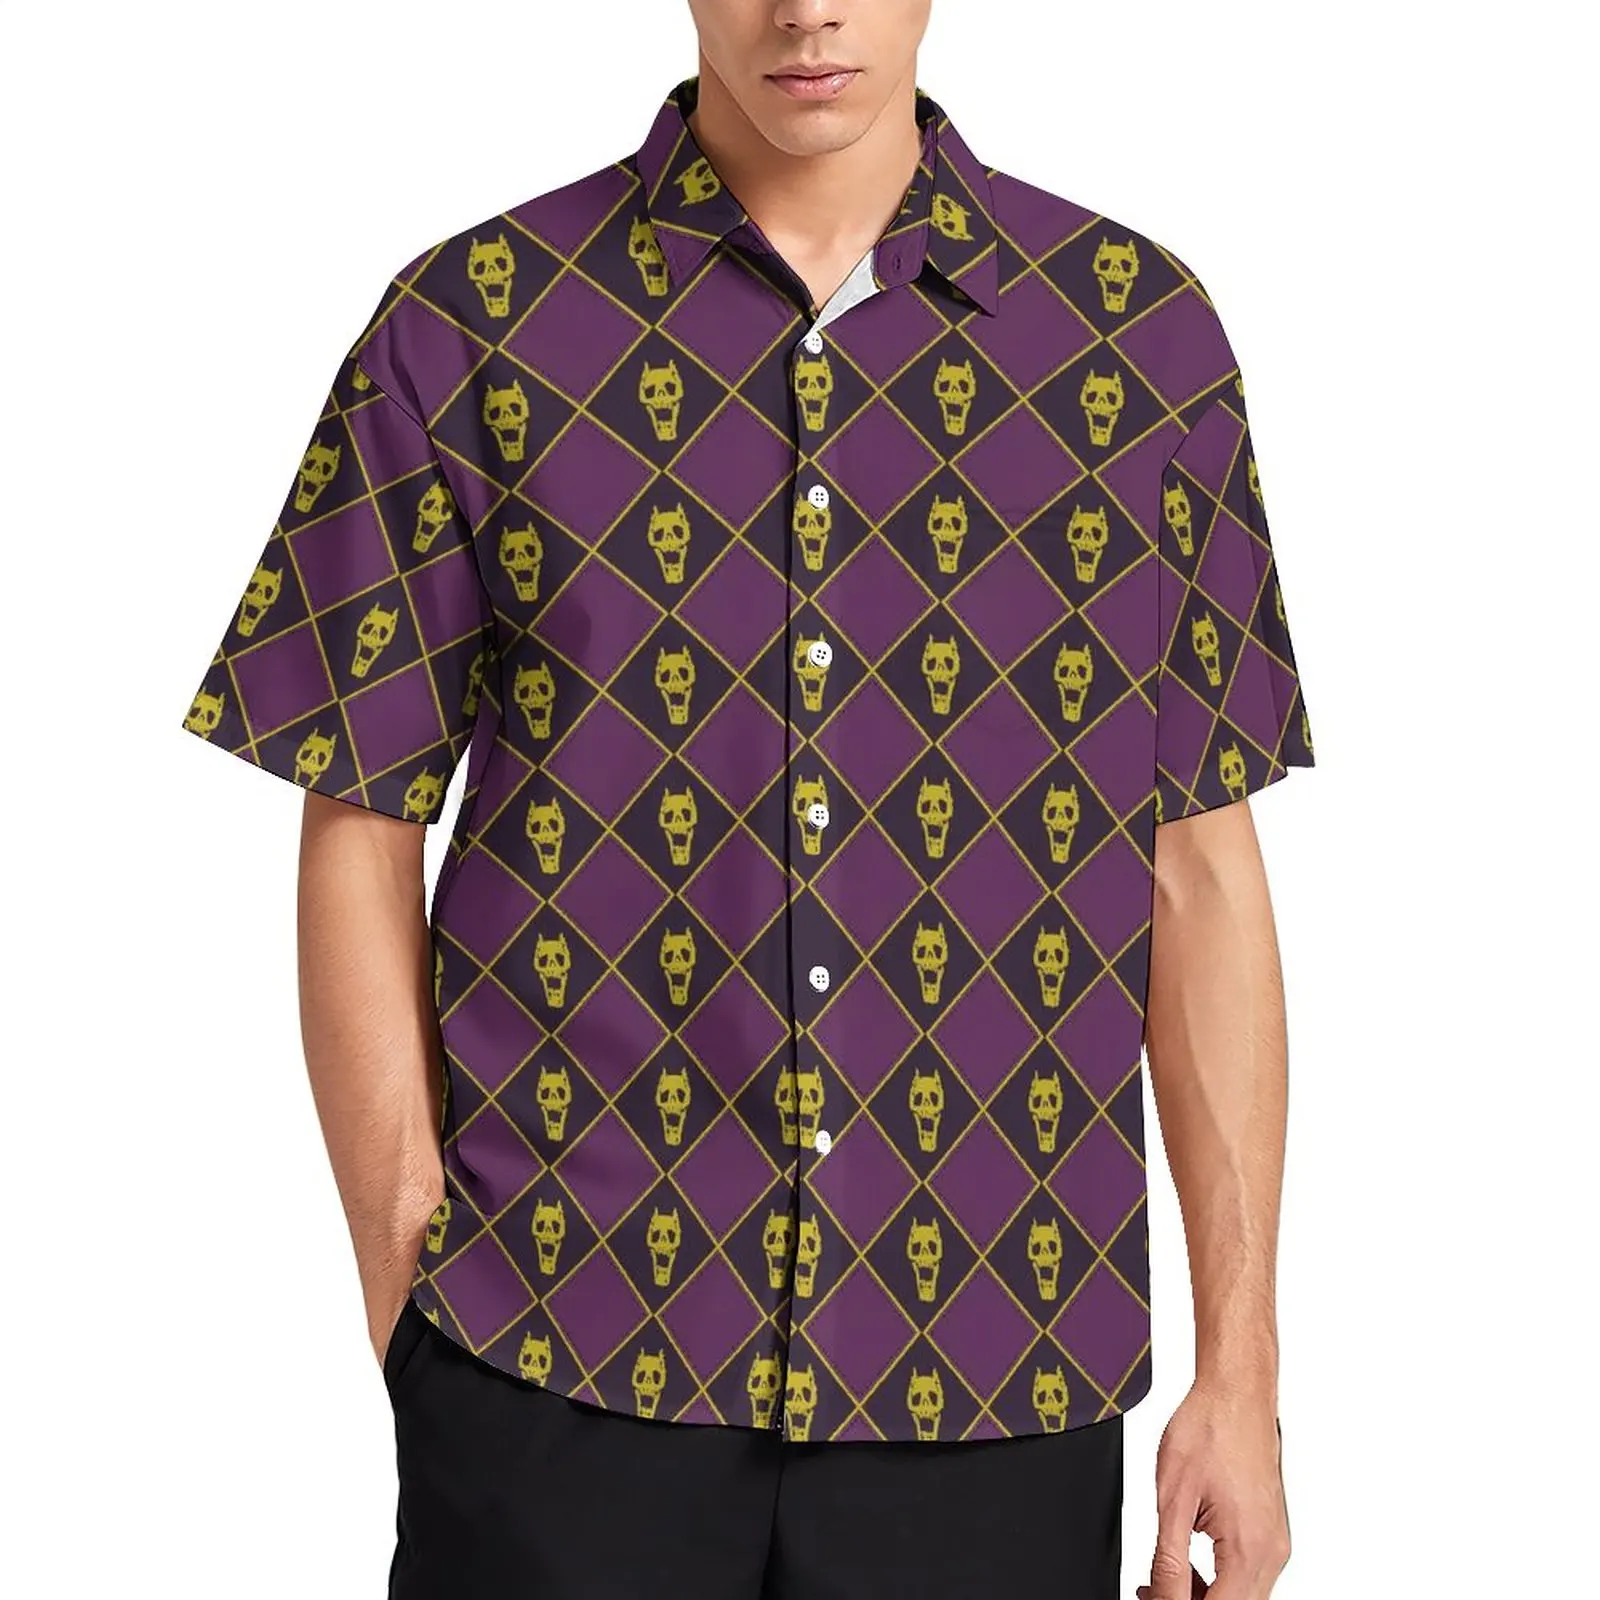 

Kira Yoshikage Jojos Bizzare Adventures Beach Shirt Killer Queen Skull Hawaiian Casual Shirts Mens Streetwear Blouses Print Top